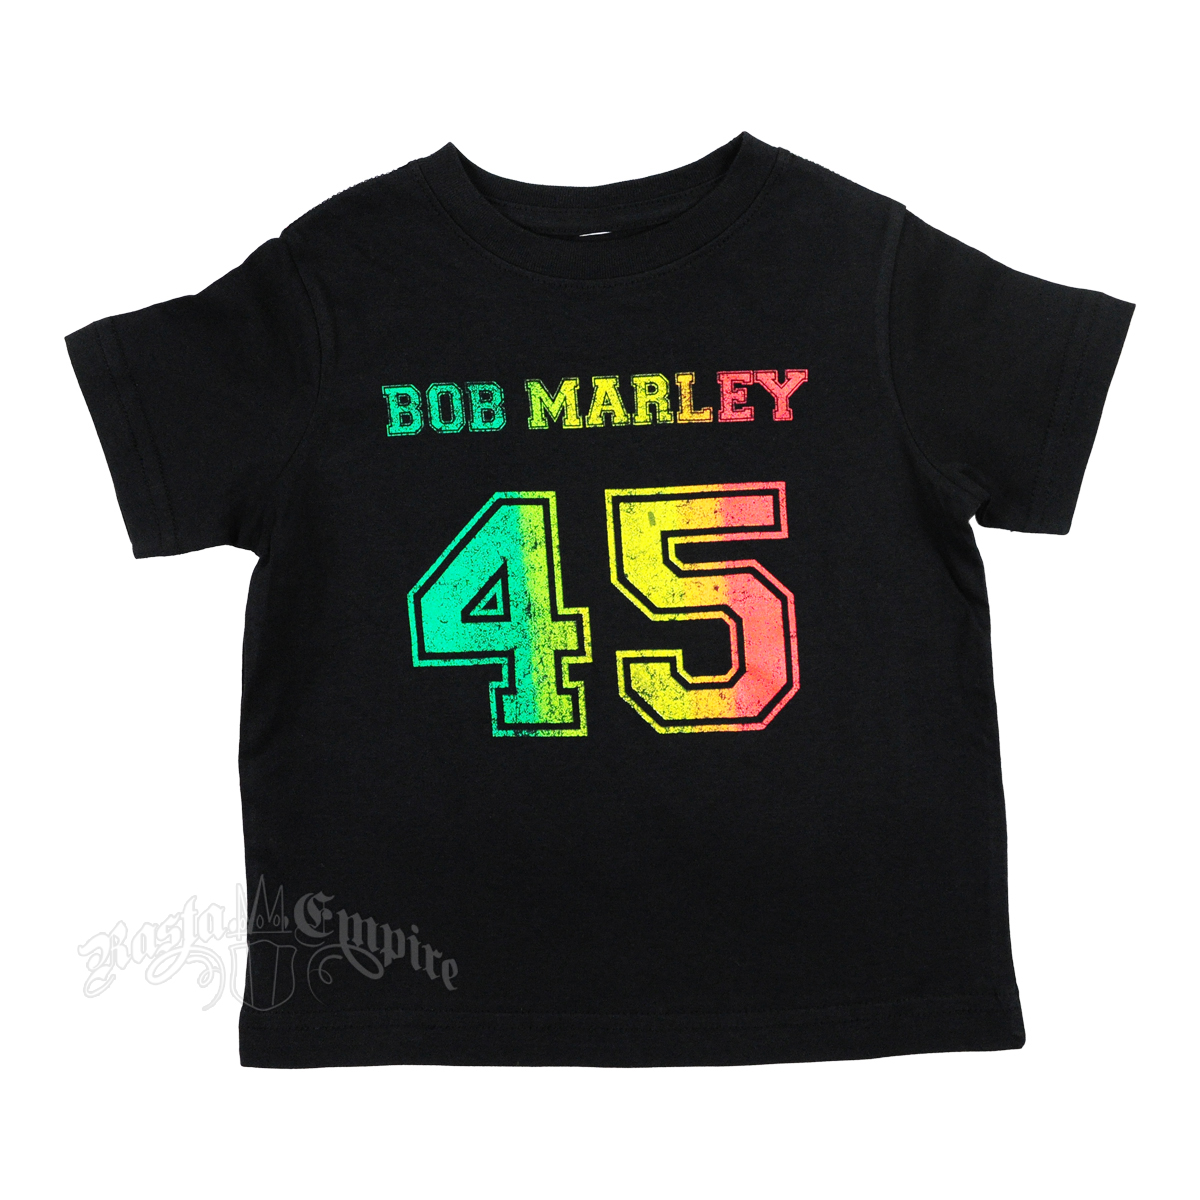 Bob Marley 45 Rasta Black T-Shirt - Toddler's